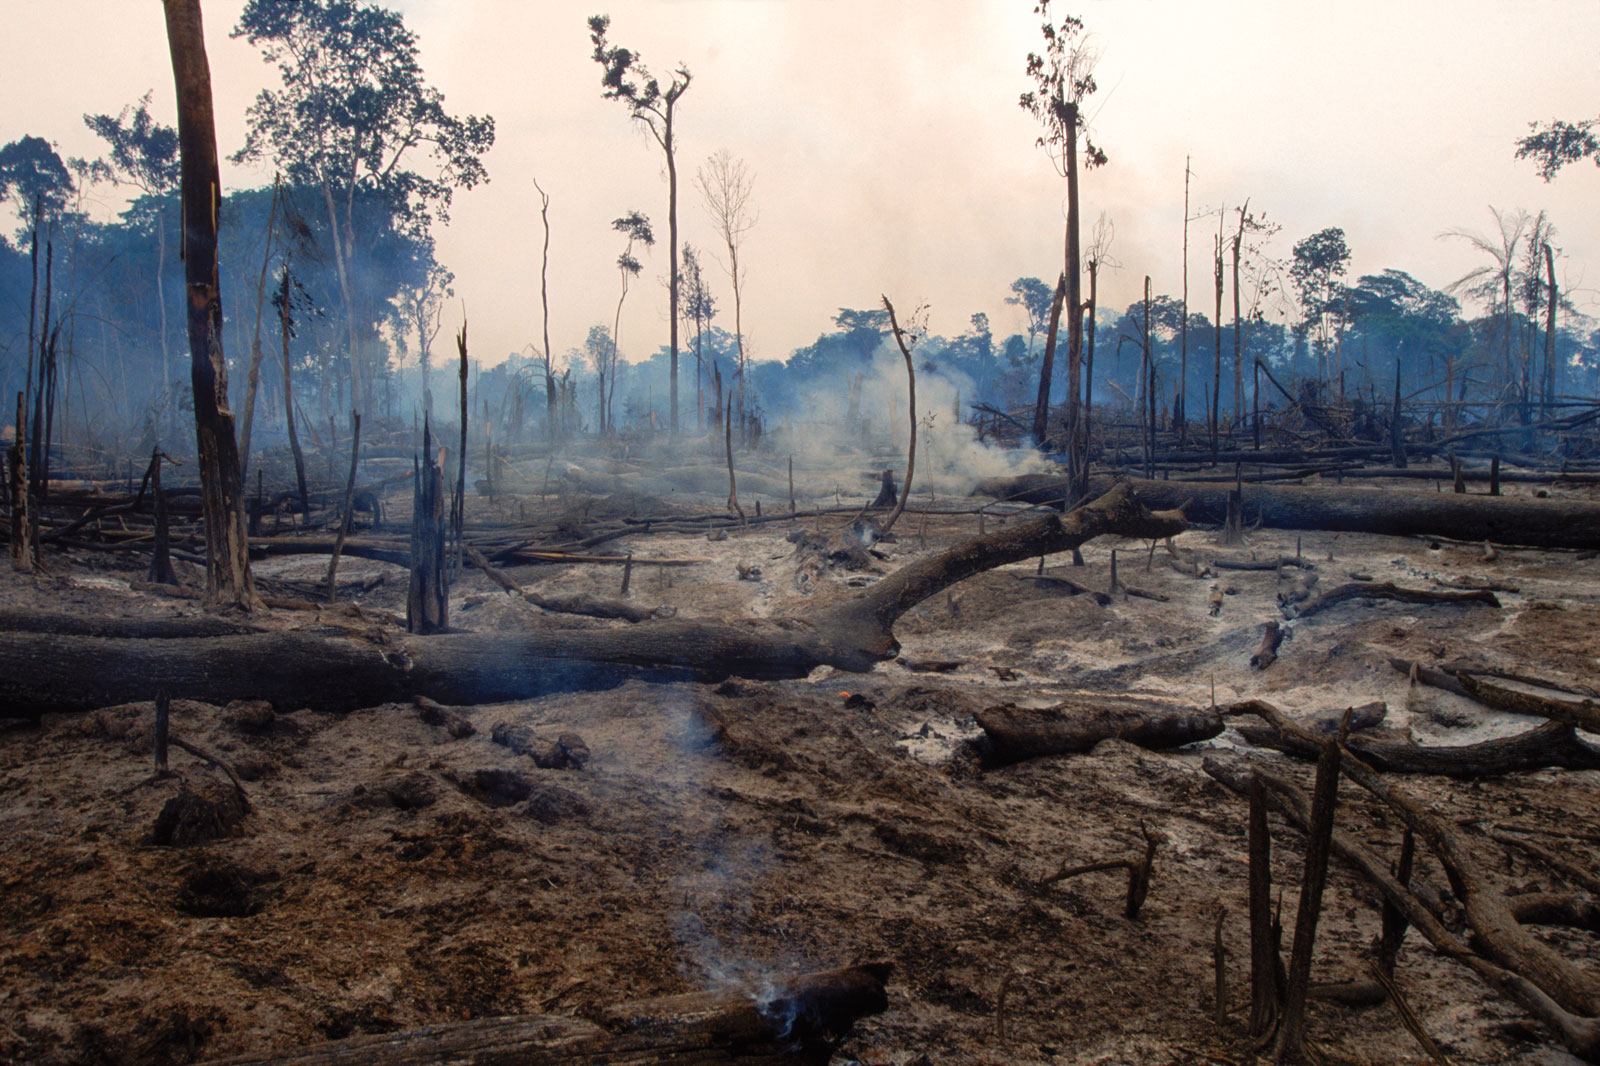 Deforestation of the Brazilian Amazon rainforest has increased almost sixfold